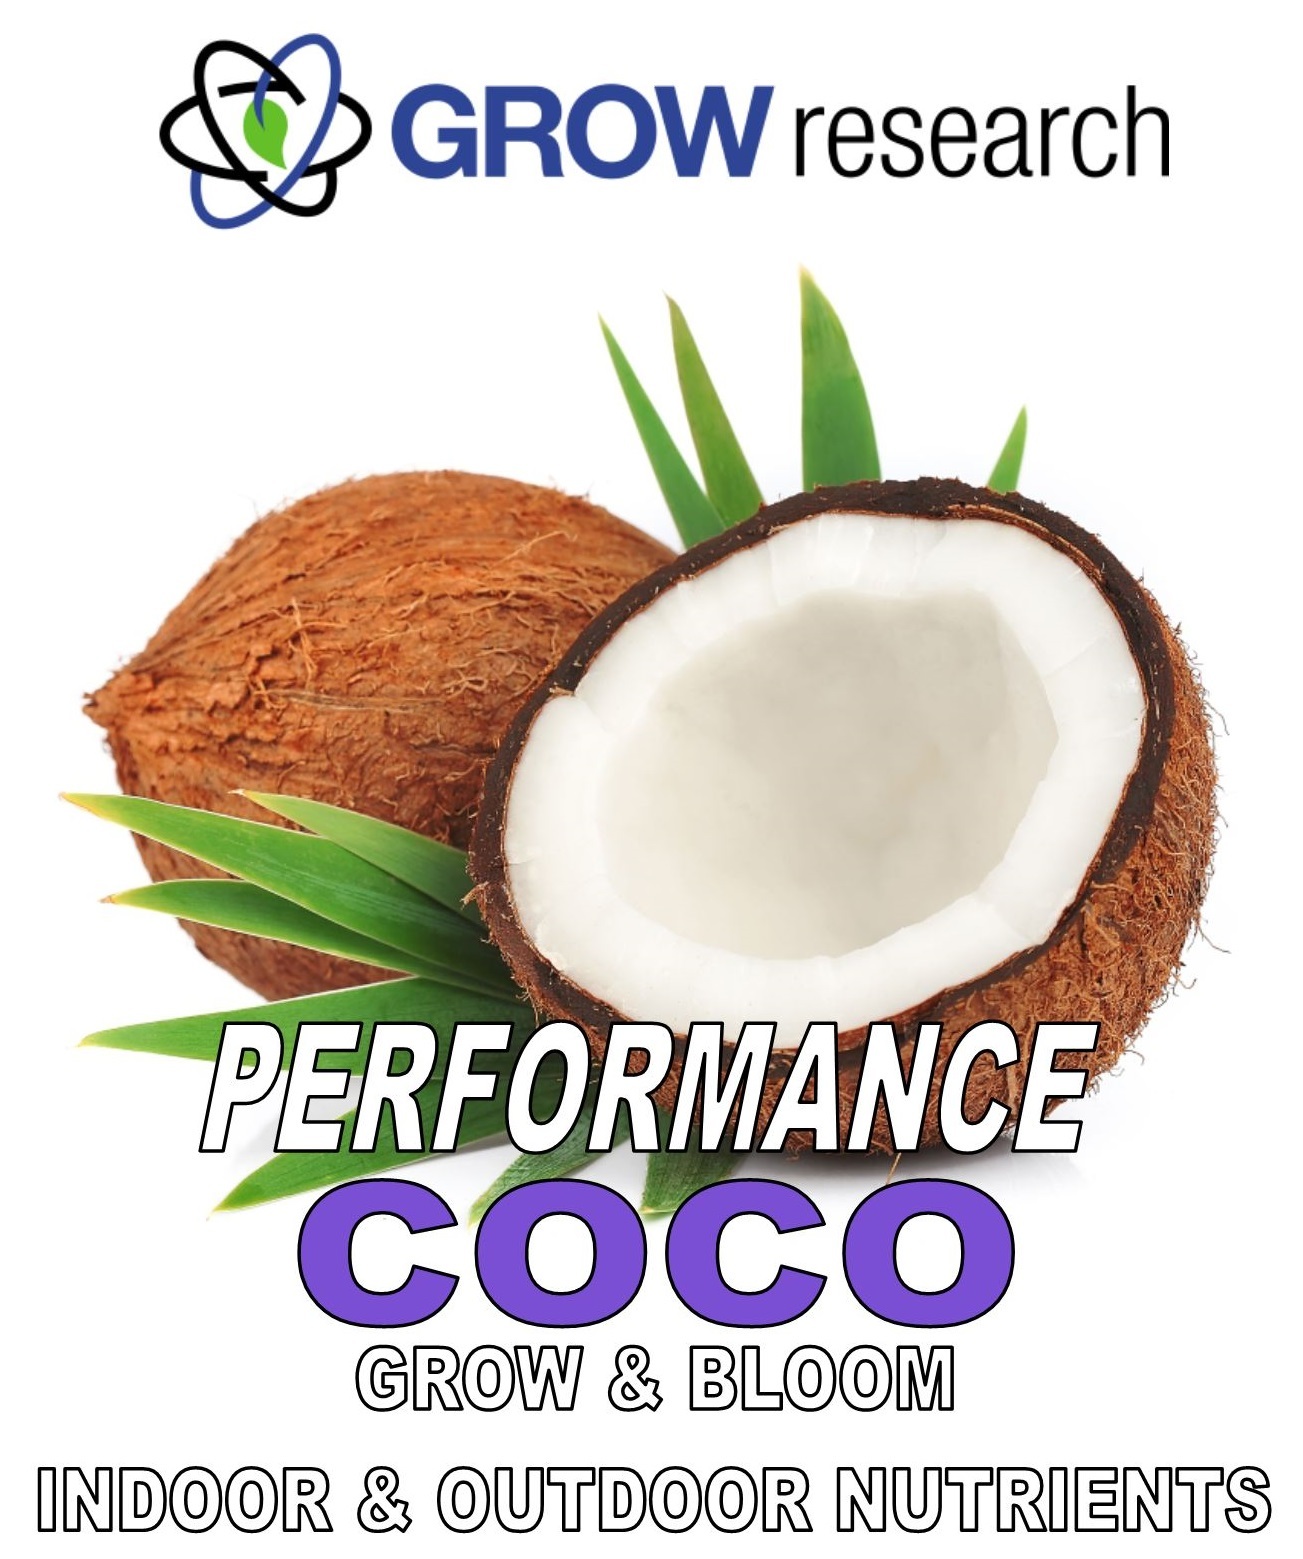 Coco 2 x 5L Grow Research Performance Coco Nutrients 2x5L =10L set